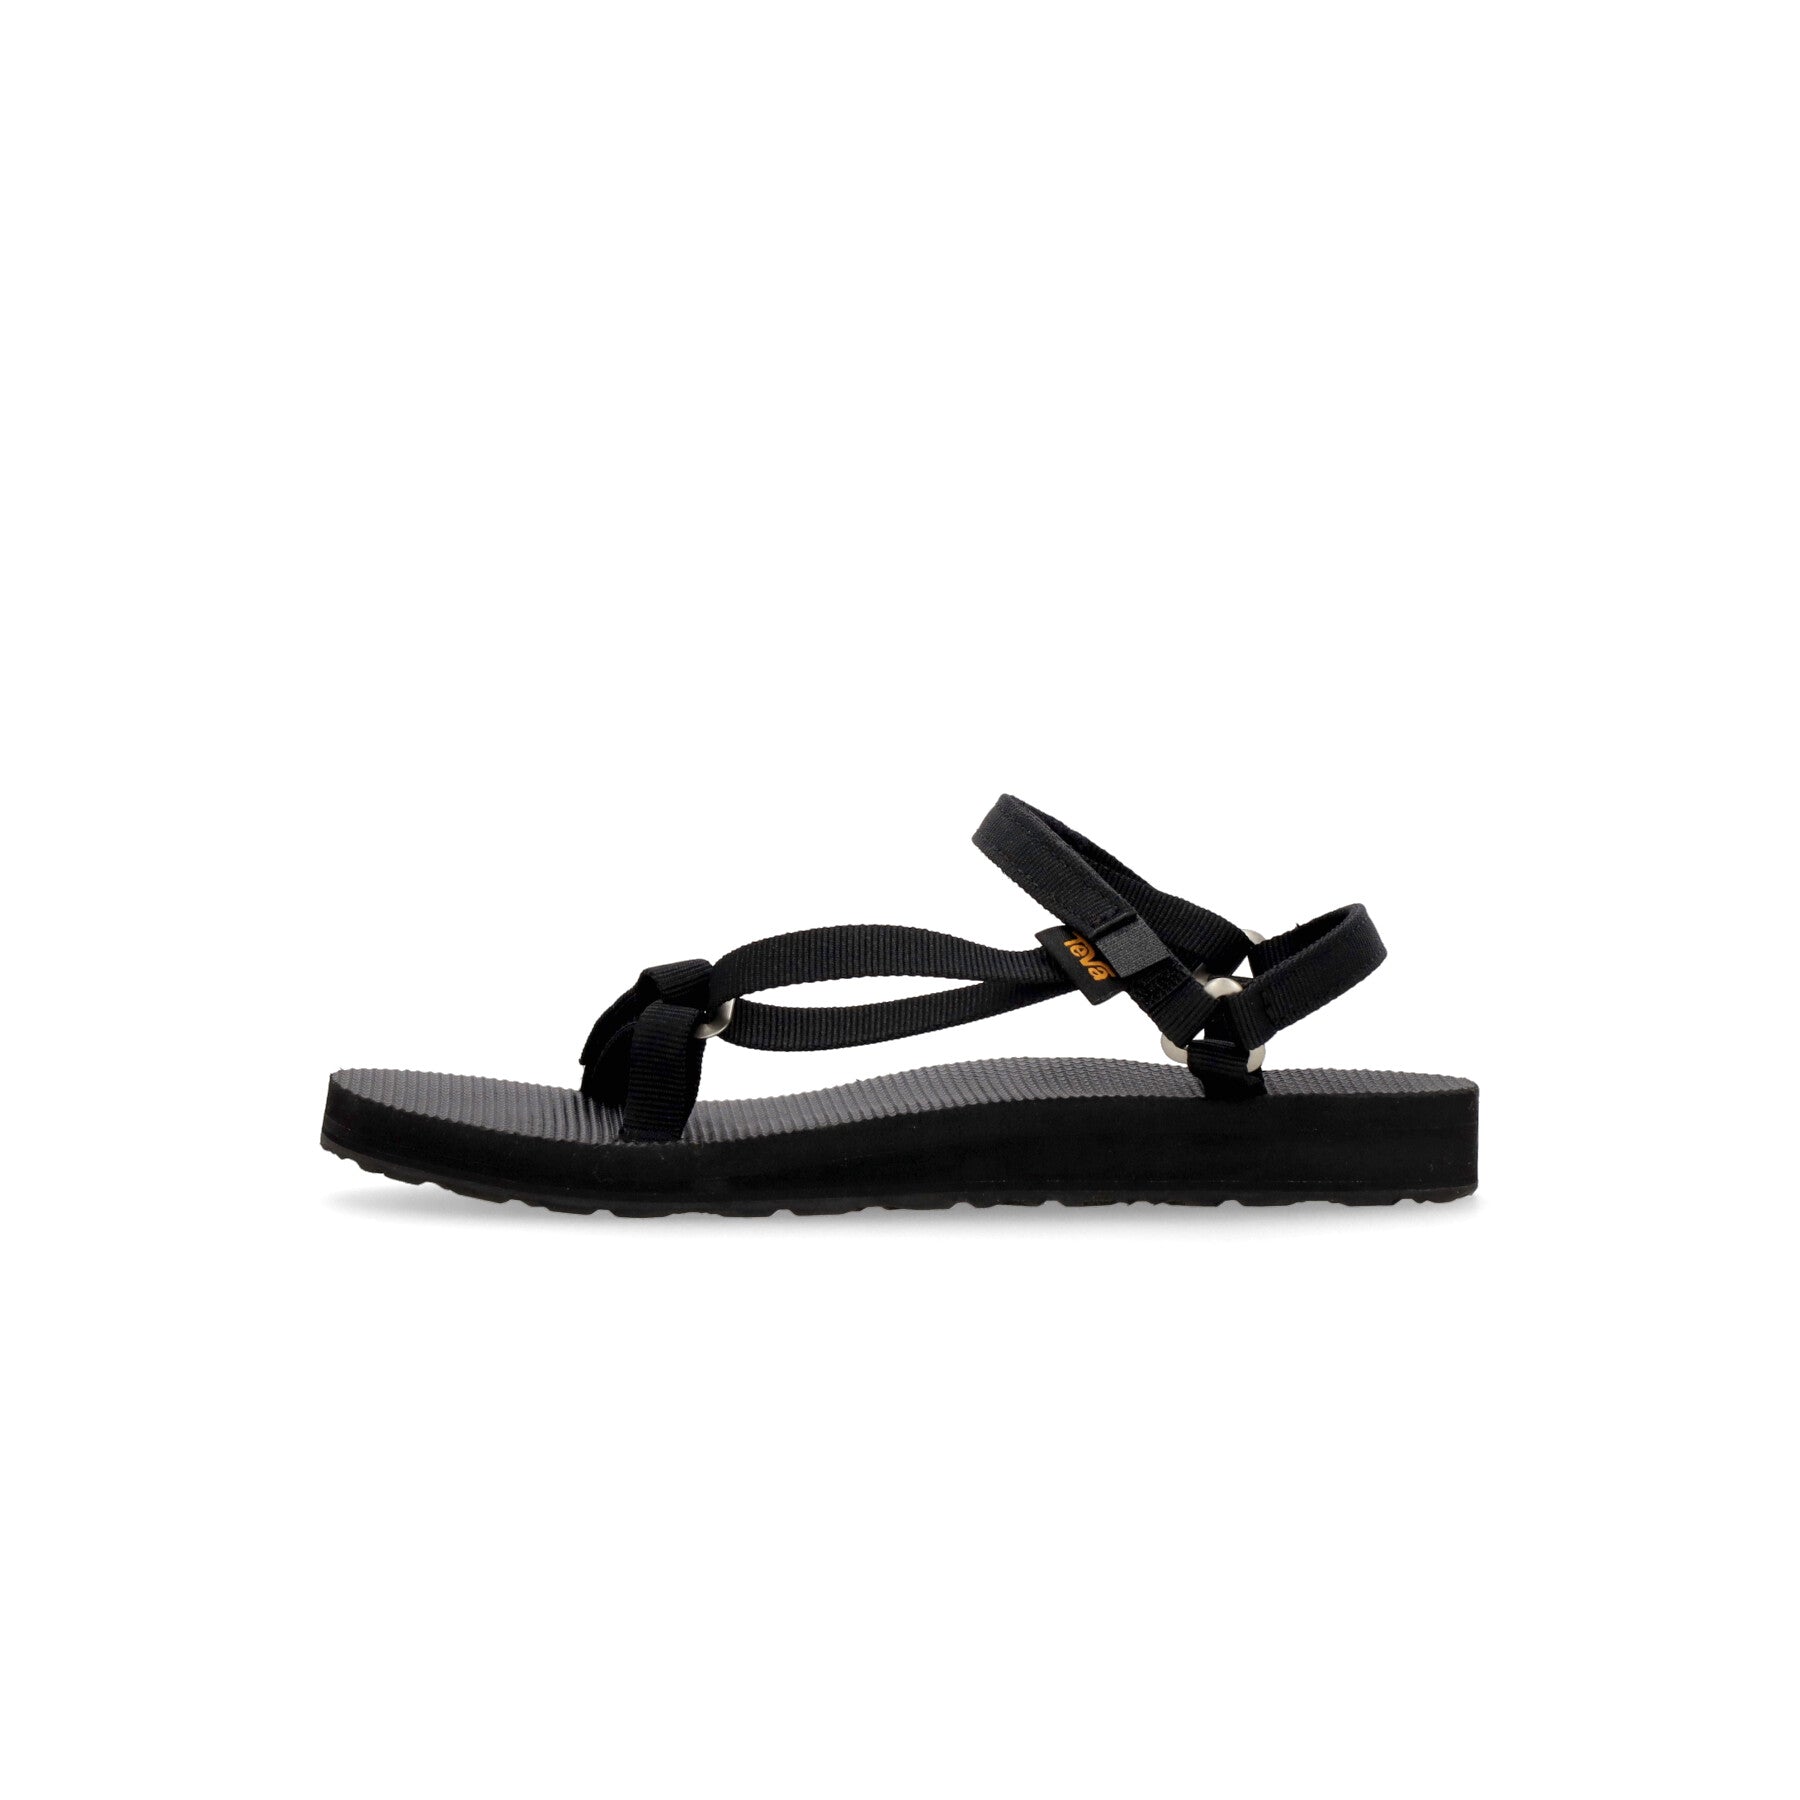 Sandalo Donna Original Universal Slim W Black 1150110-BLK